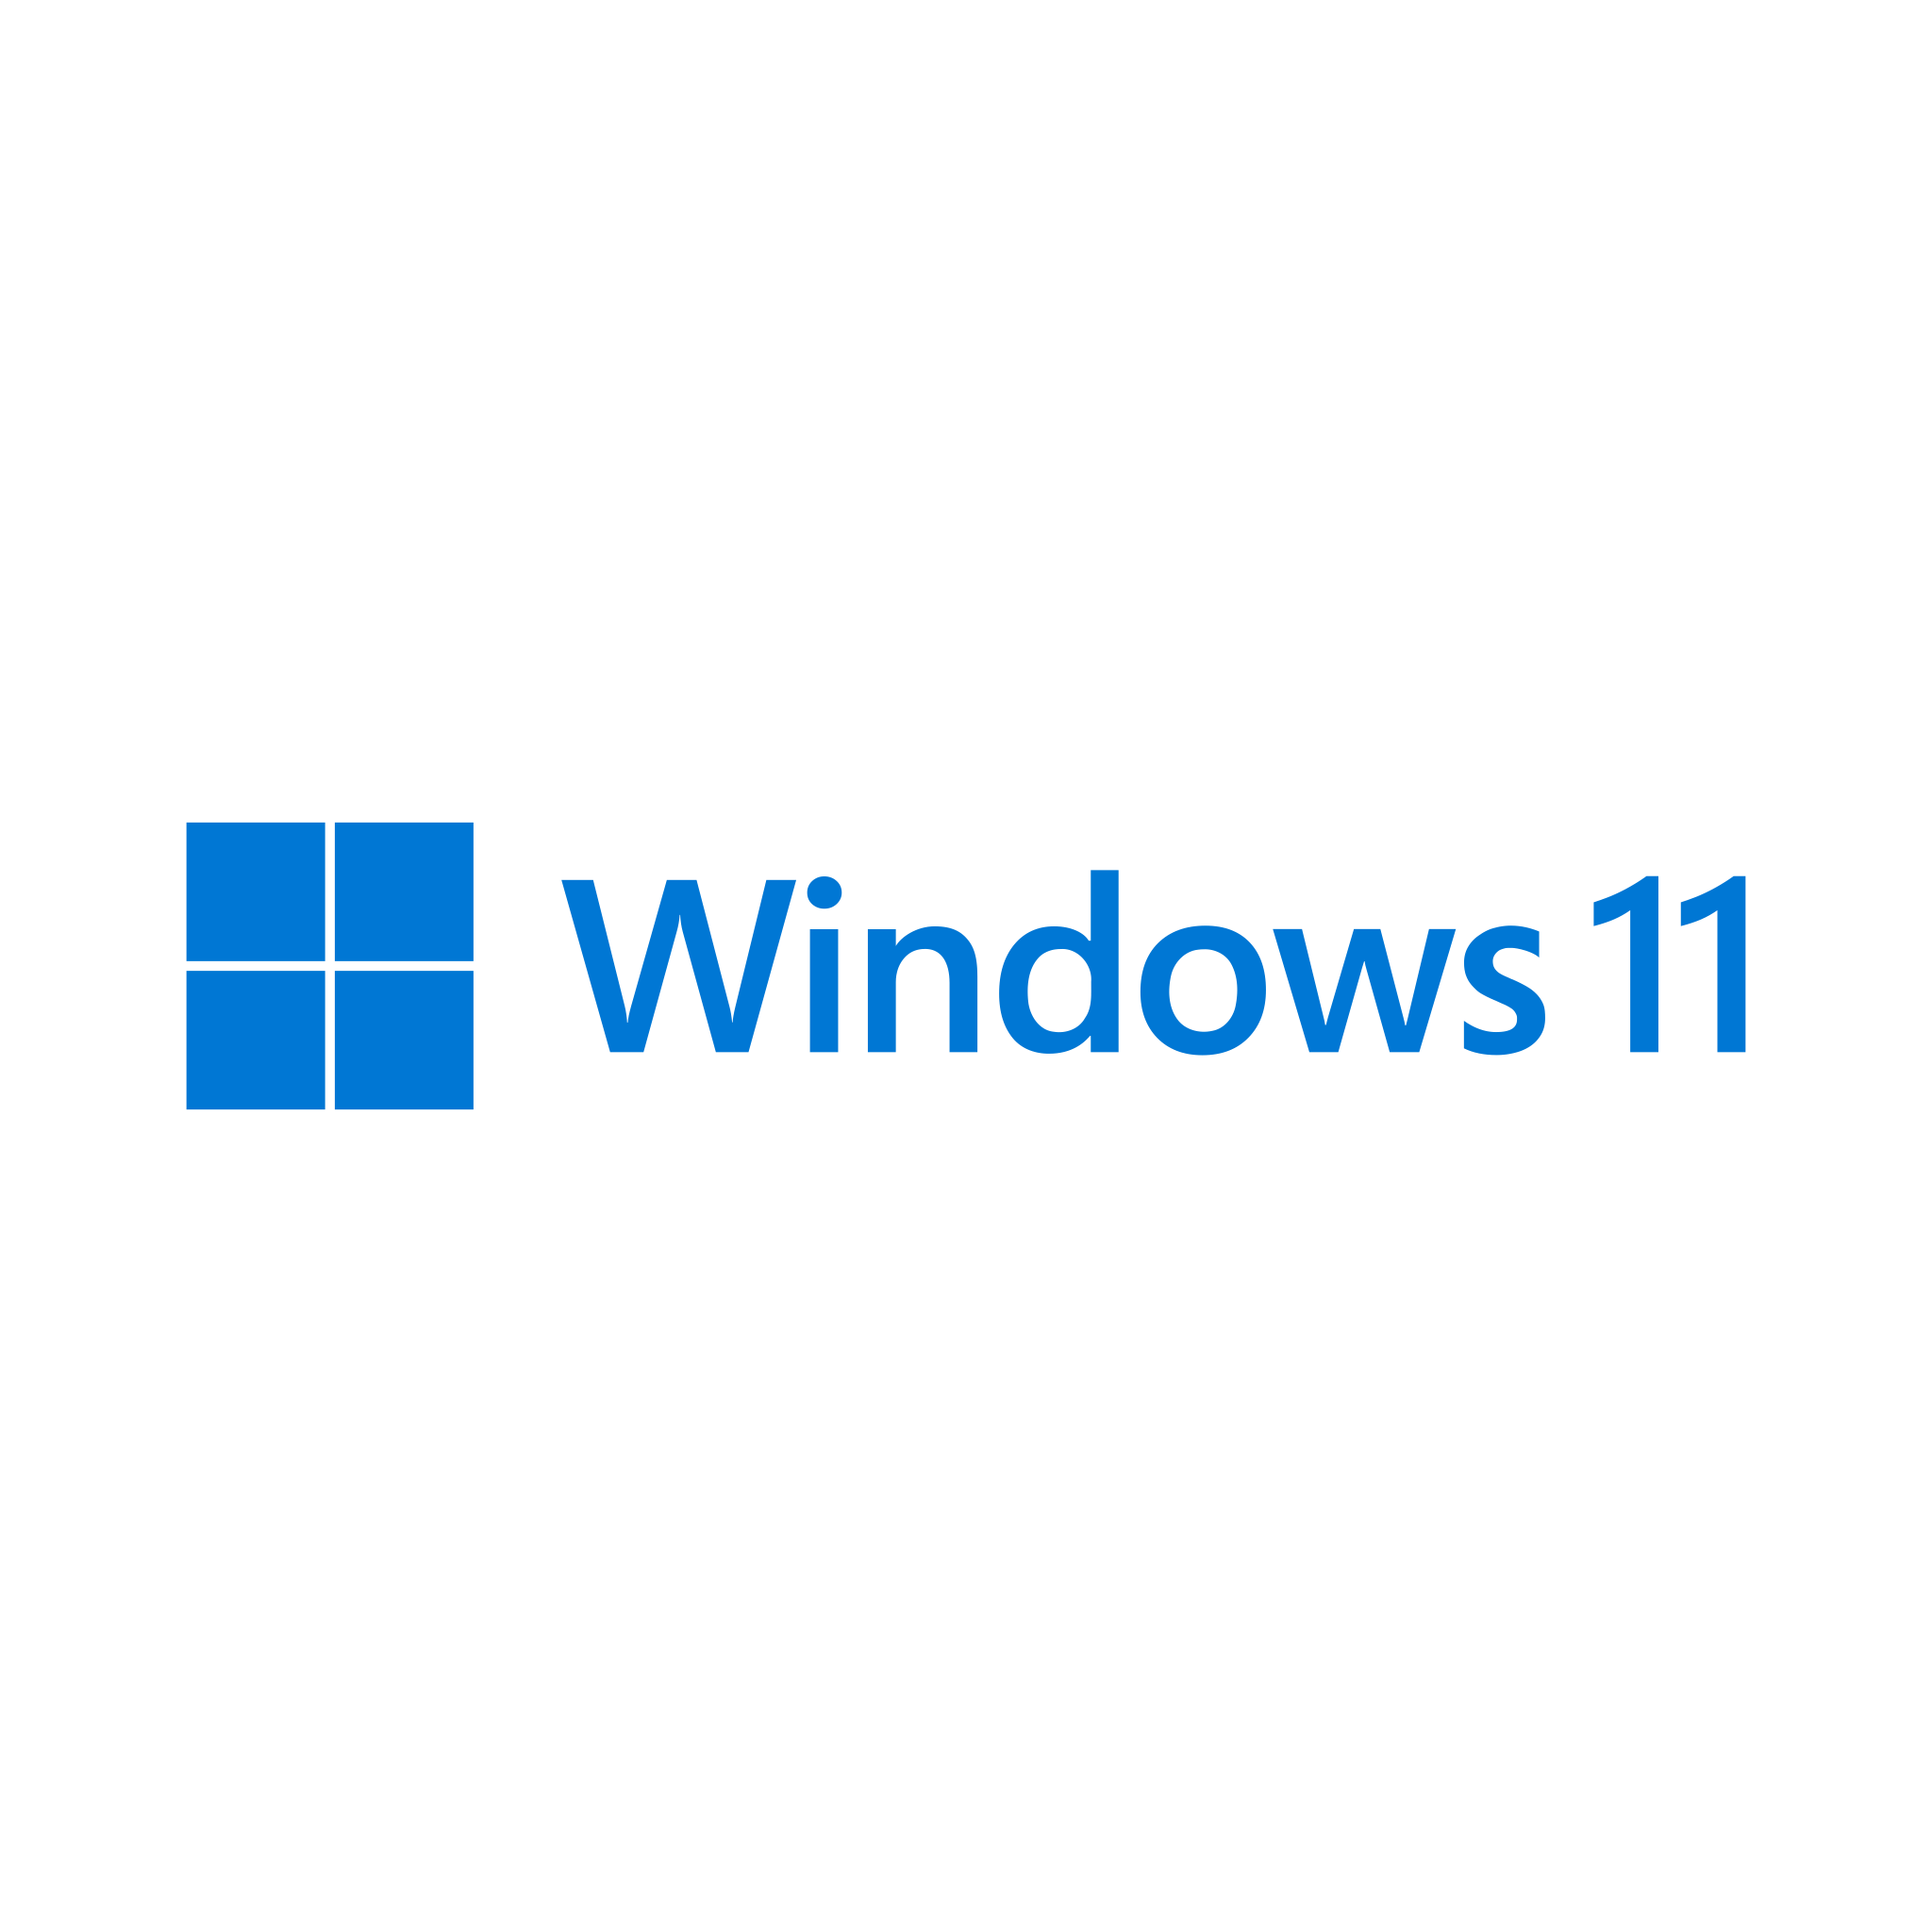 Windows 11 Logo Png And Vector Logo Download - Gambaran